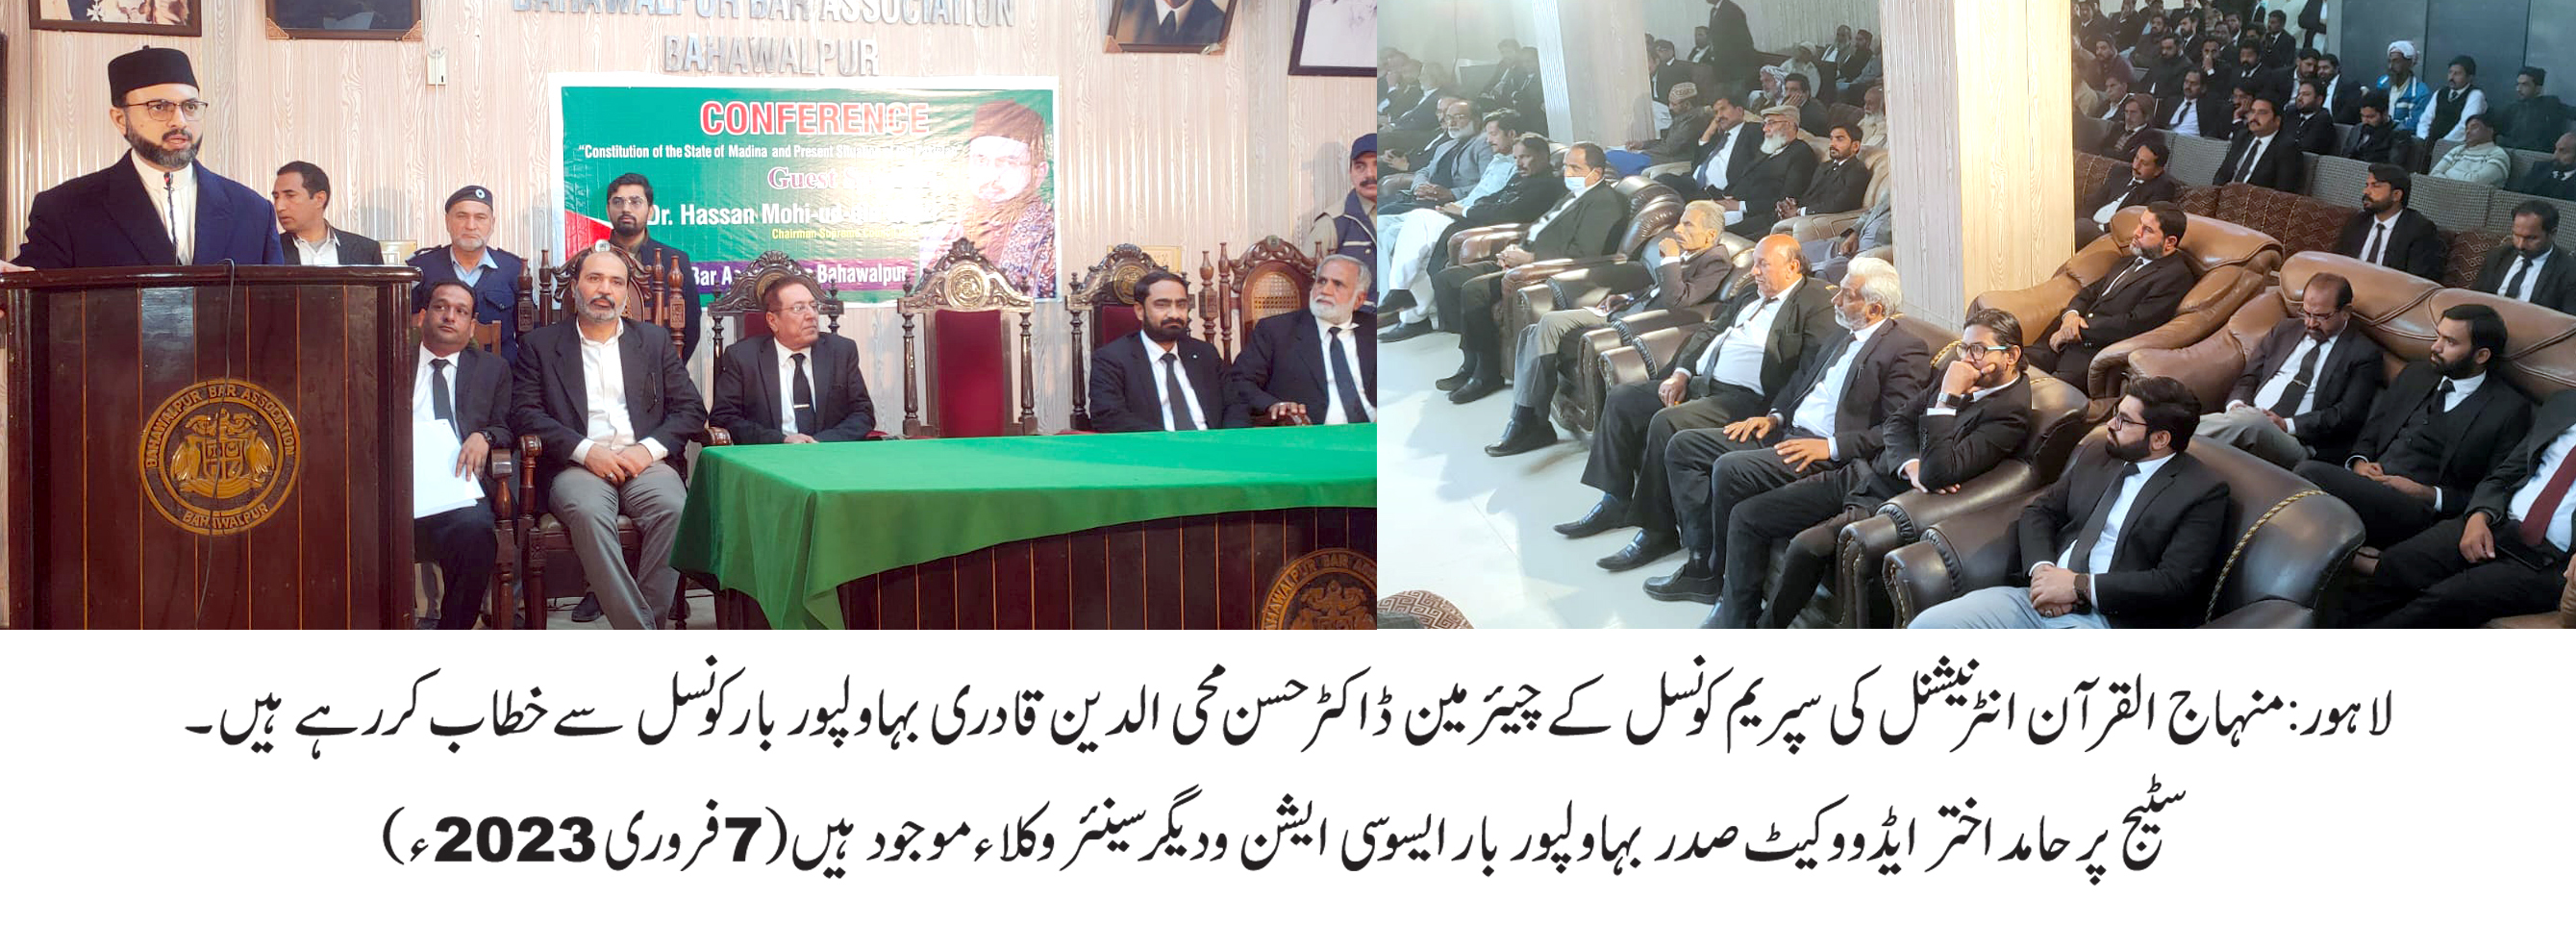 Dr Hassan Qadri addressing Peoples of Bahawalpur Bar-Council